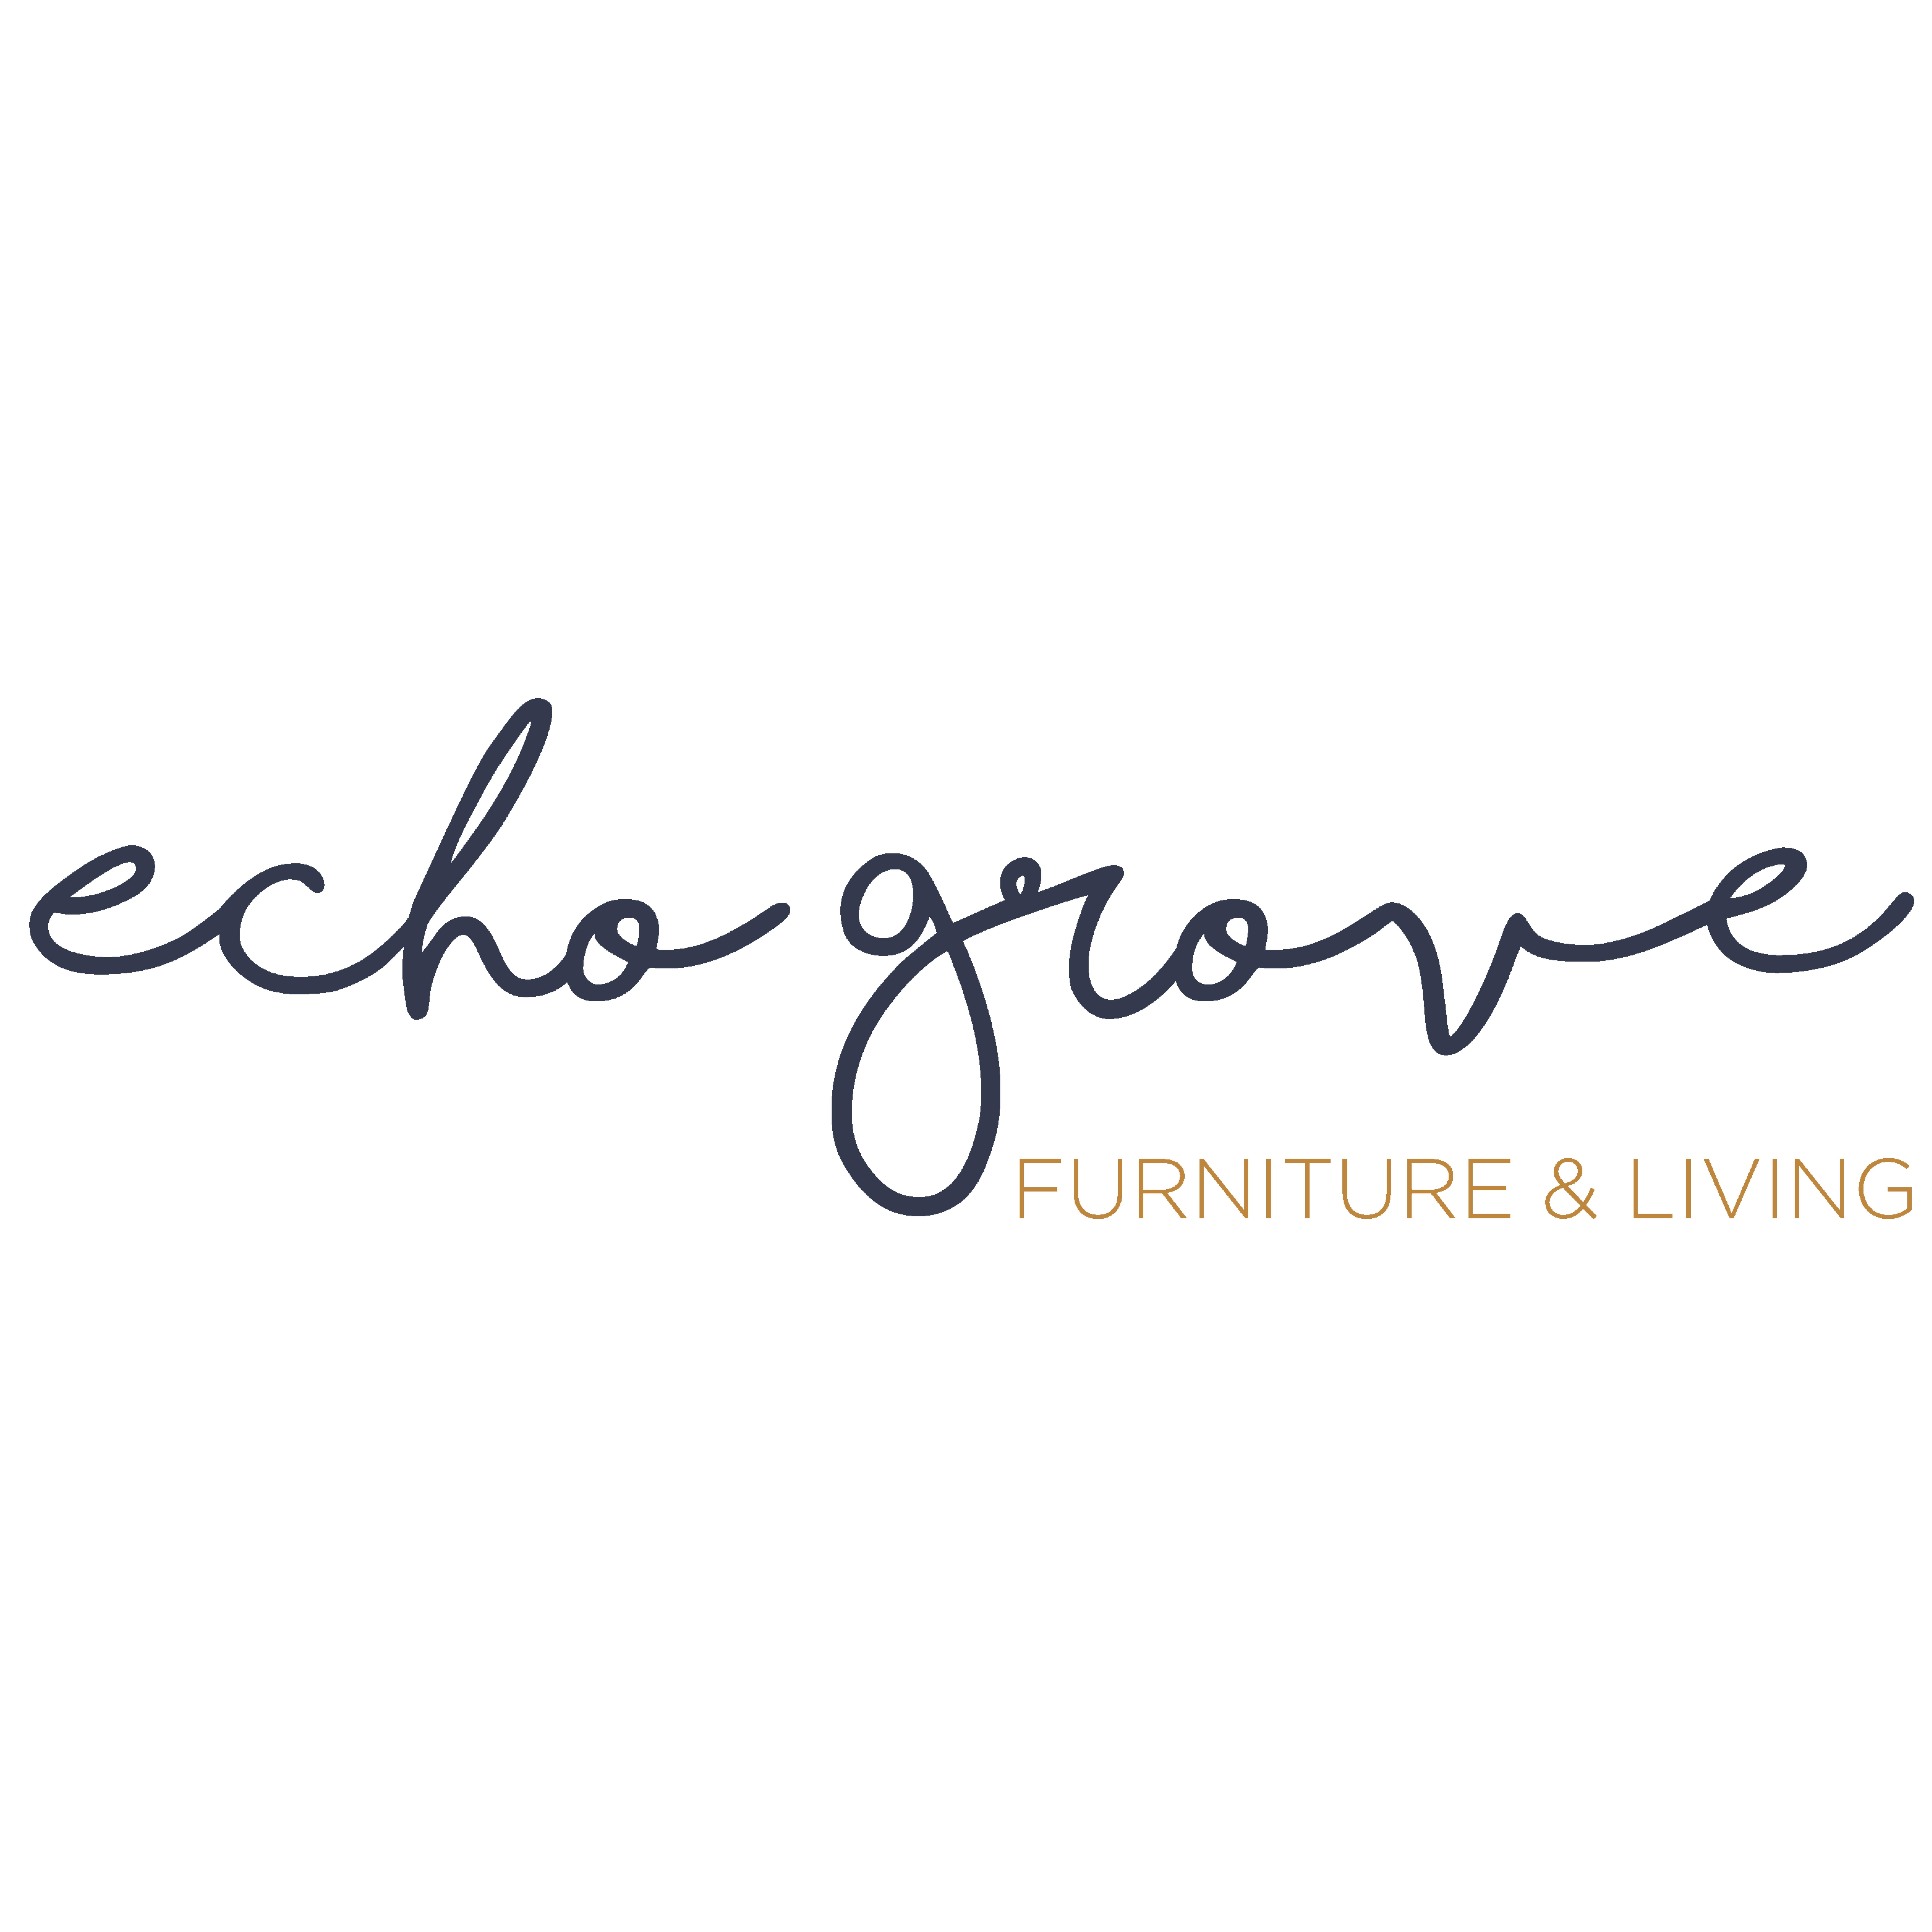 Echo Grove Furniture And Living Carpentaria